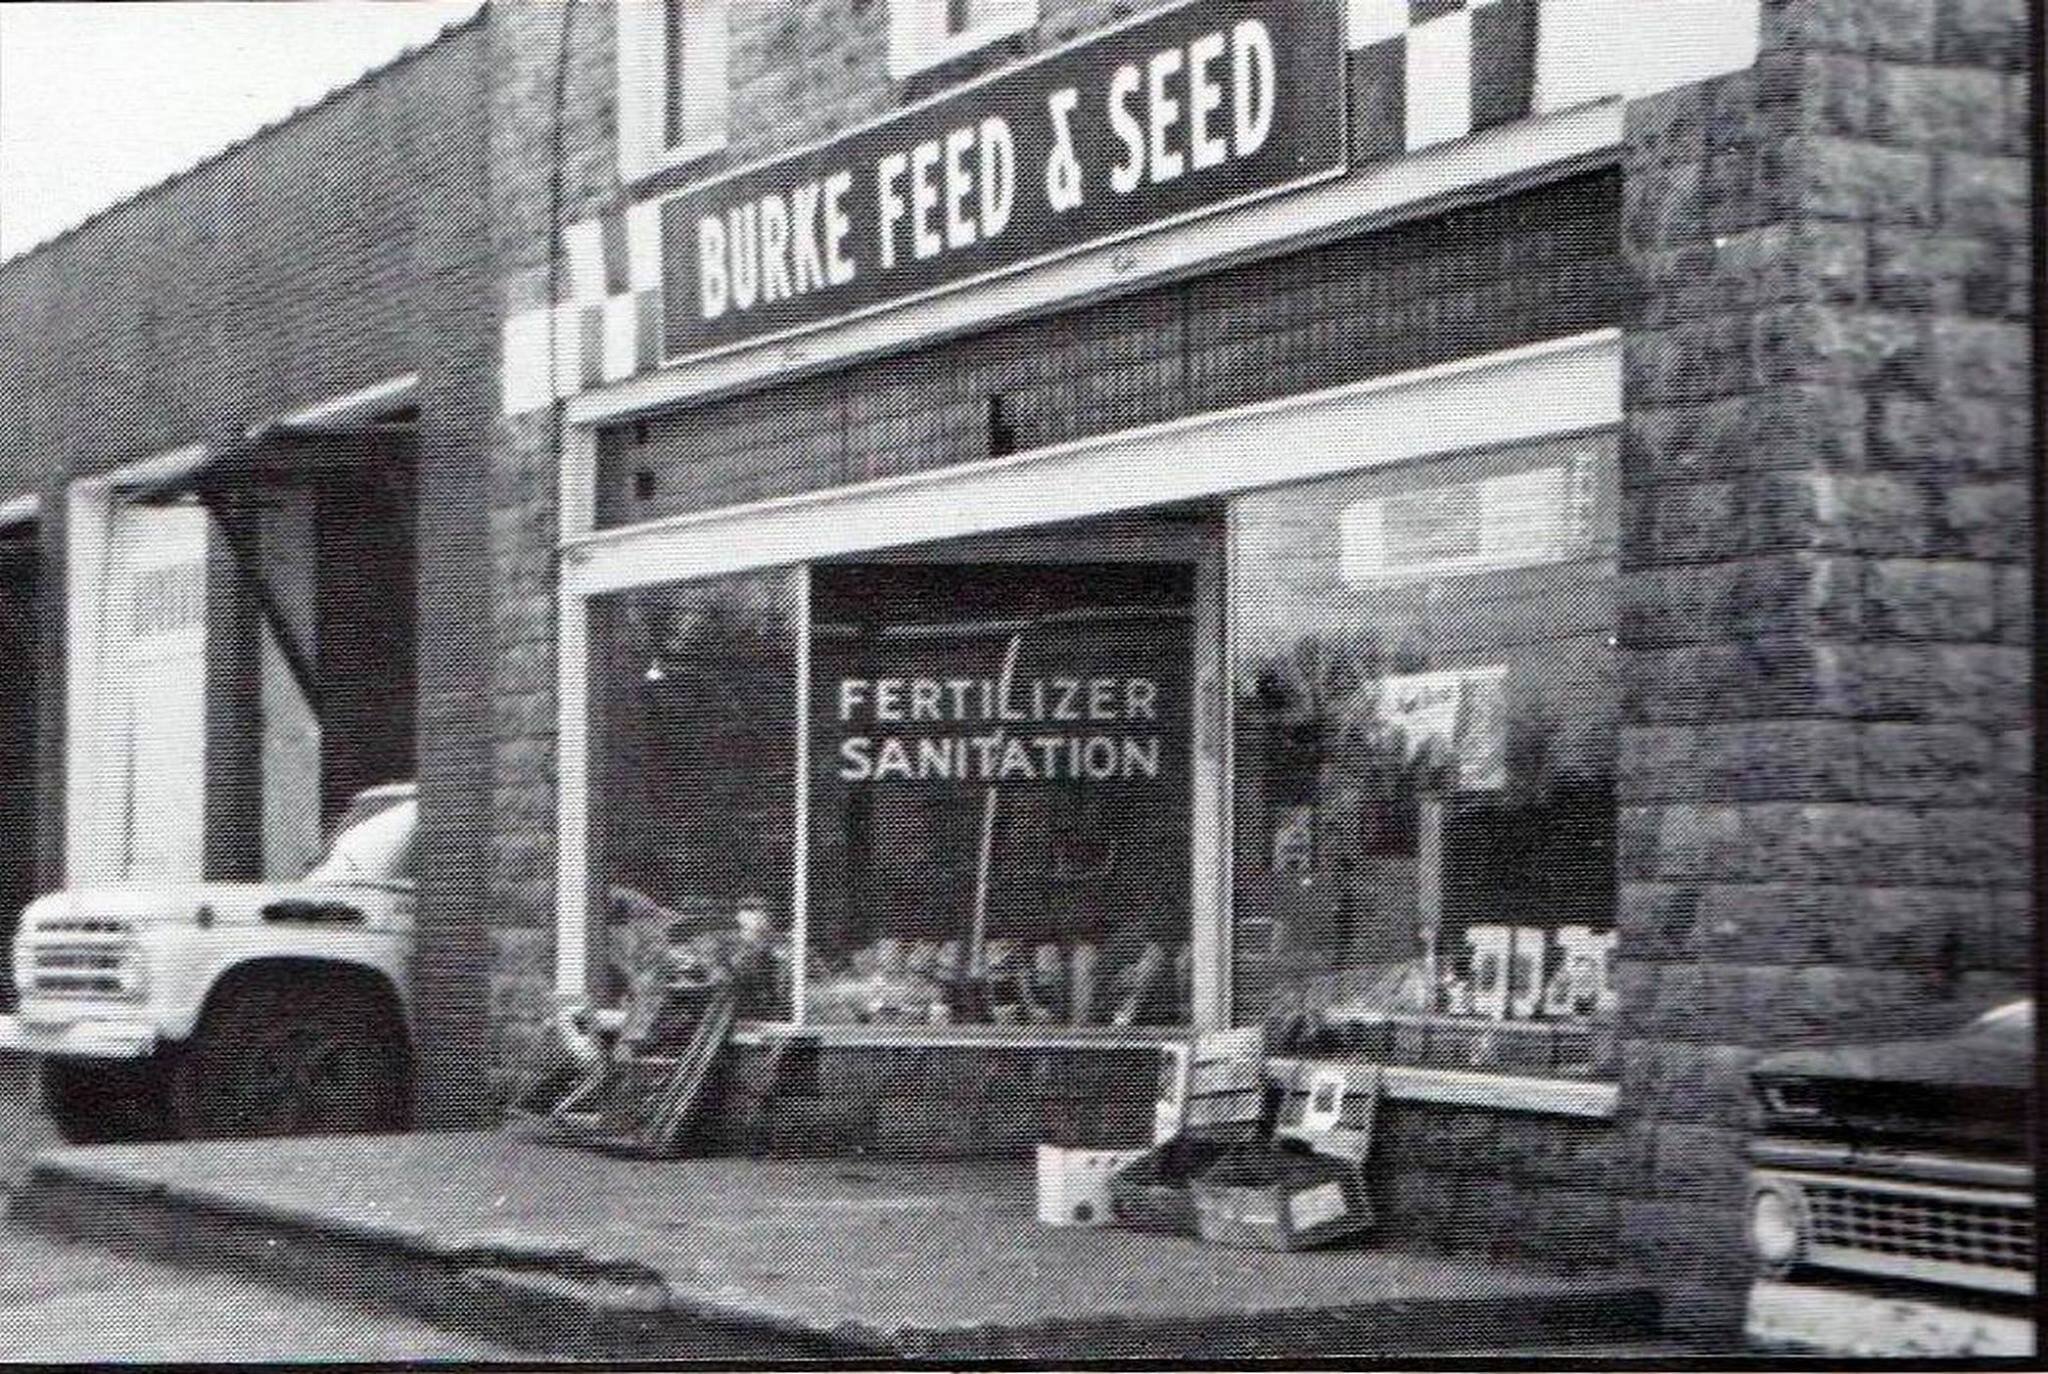 Burke Feed and Seed Historic Photo.jpg